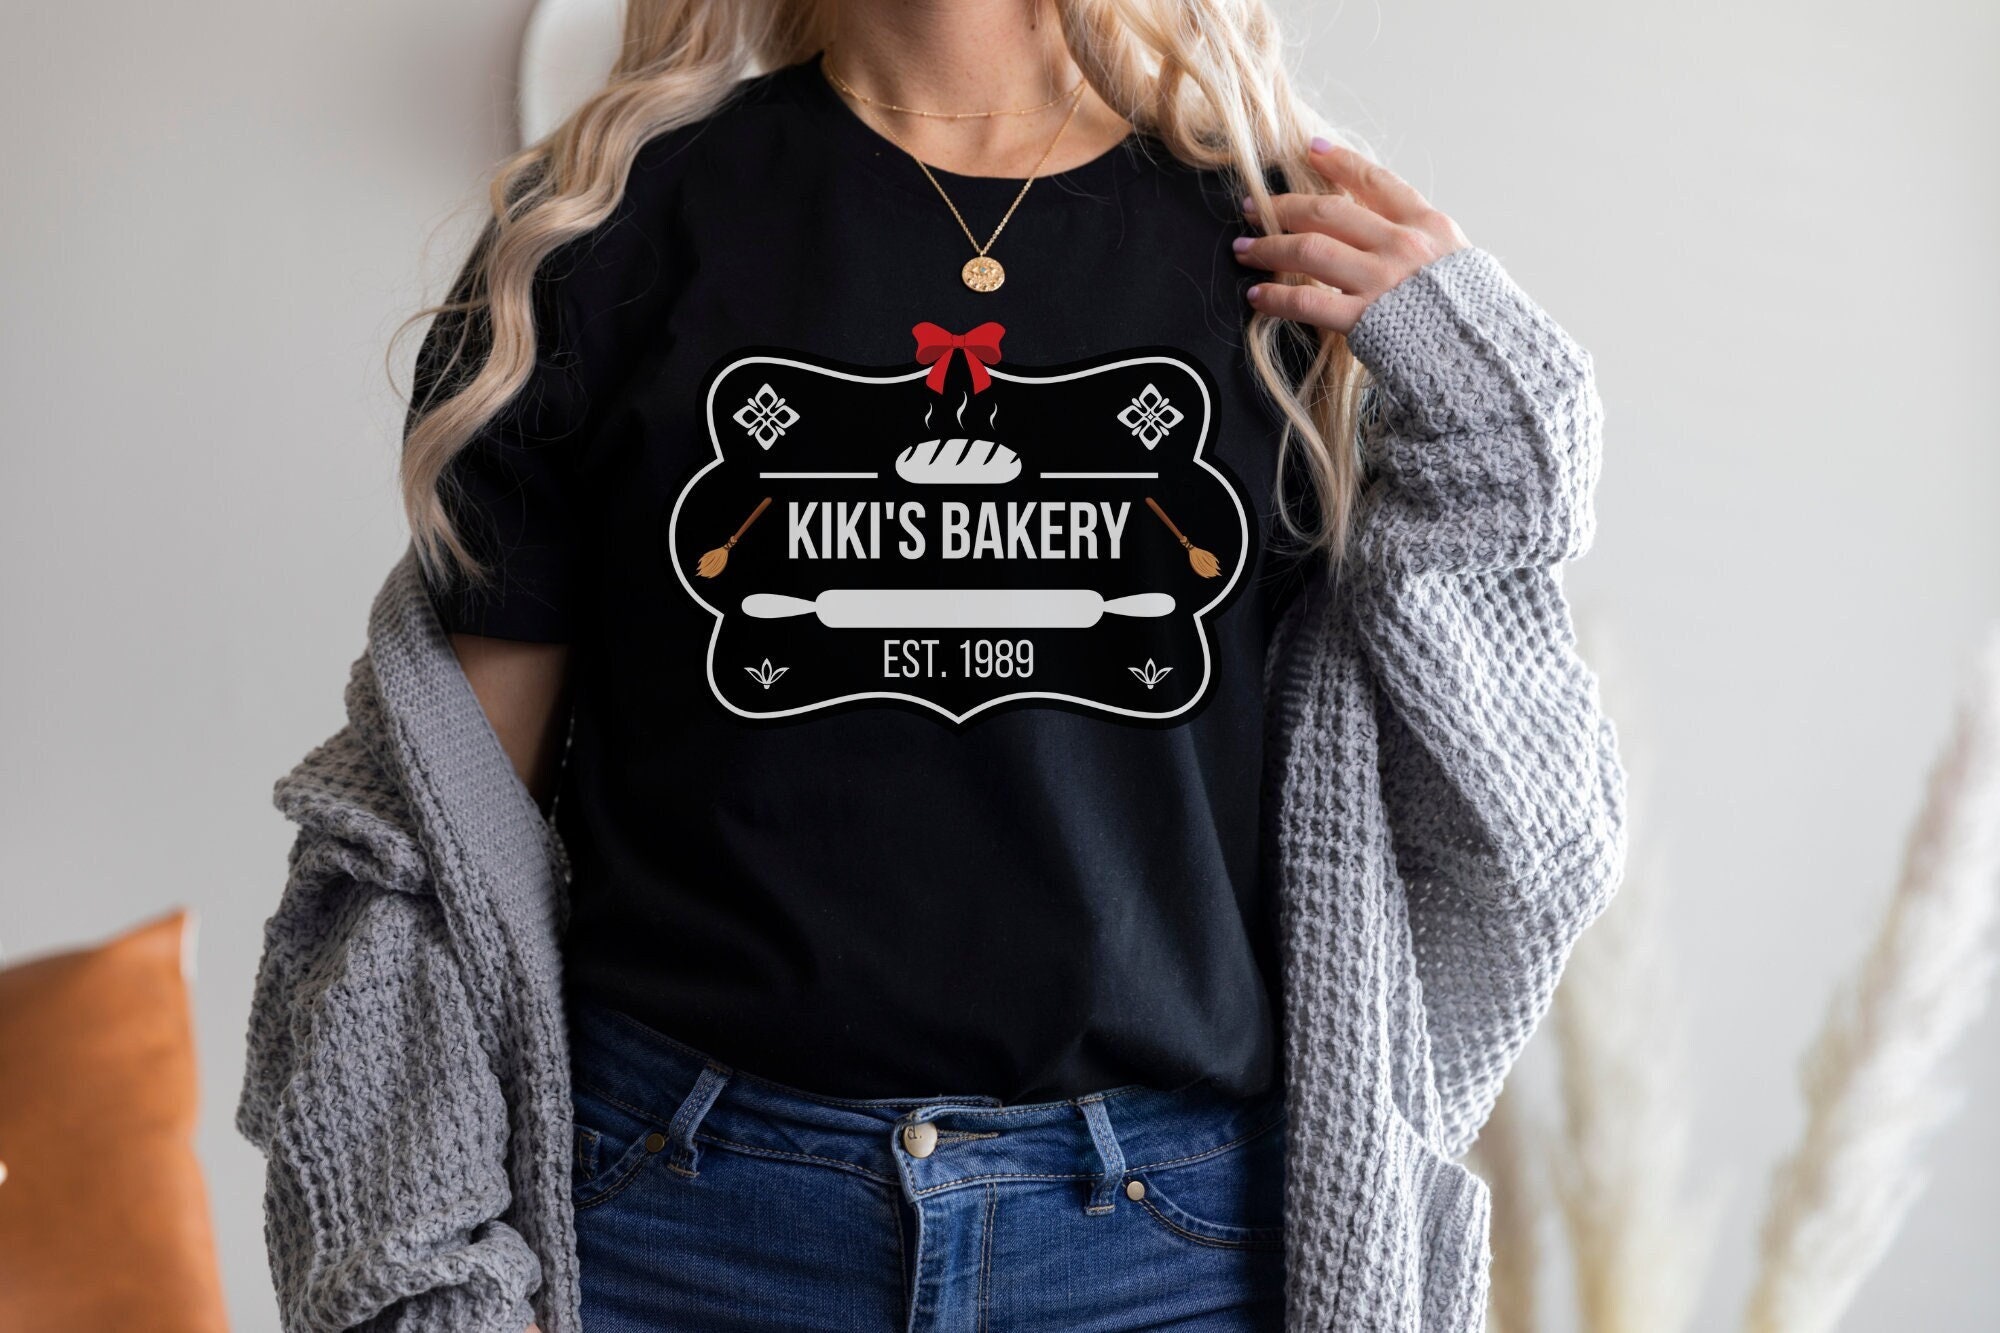 Discover Kikis Lieferservice inspiriertes Kiki's Bakery T-Shirt